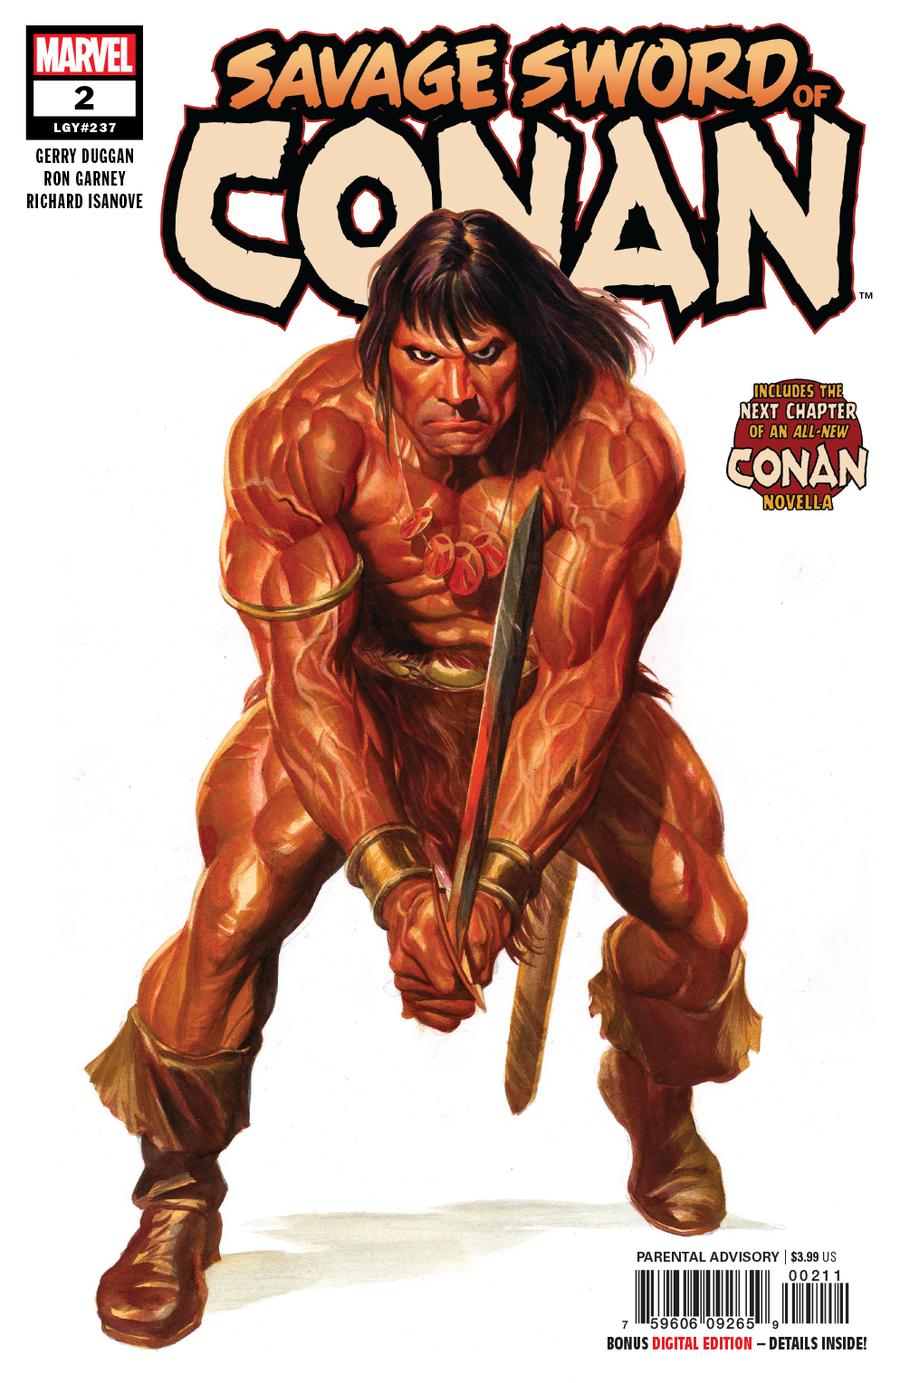 Savage Sword of Conan #2 [2019]